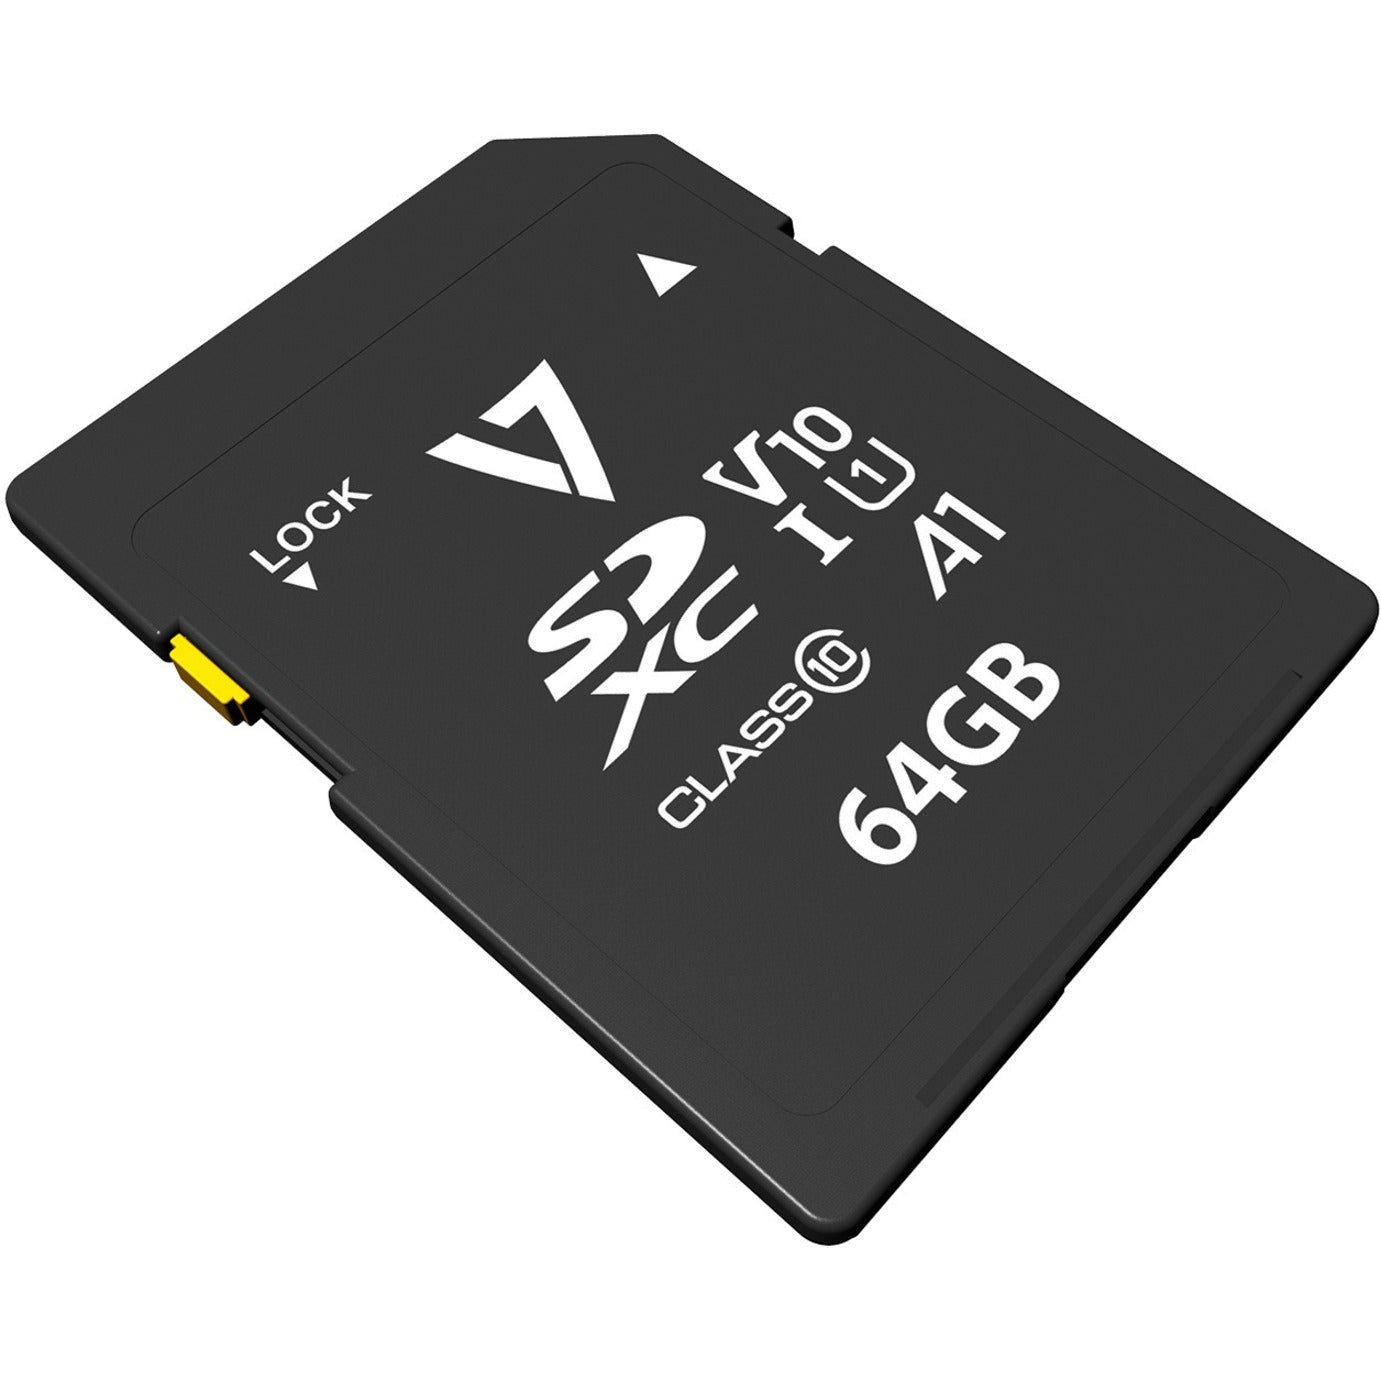 V7 VPSD64GV10U1 64GB SDXC Card V10 U1 A1 CL10 UHD, 90MB/s Read, 18MB/s Write, 5 Year Warranty